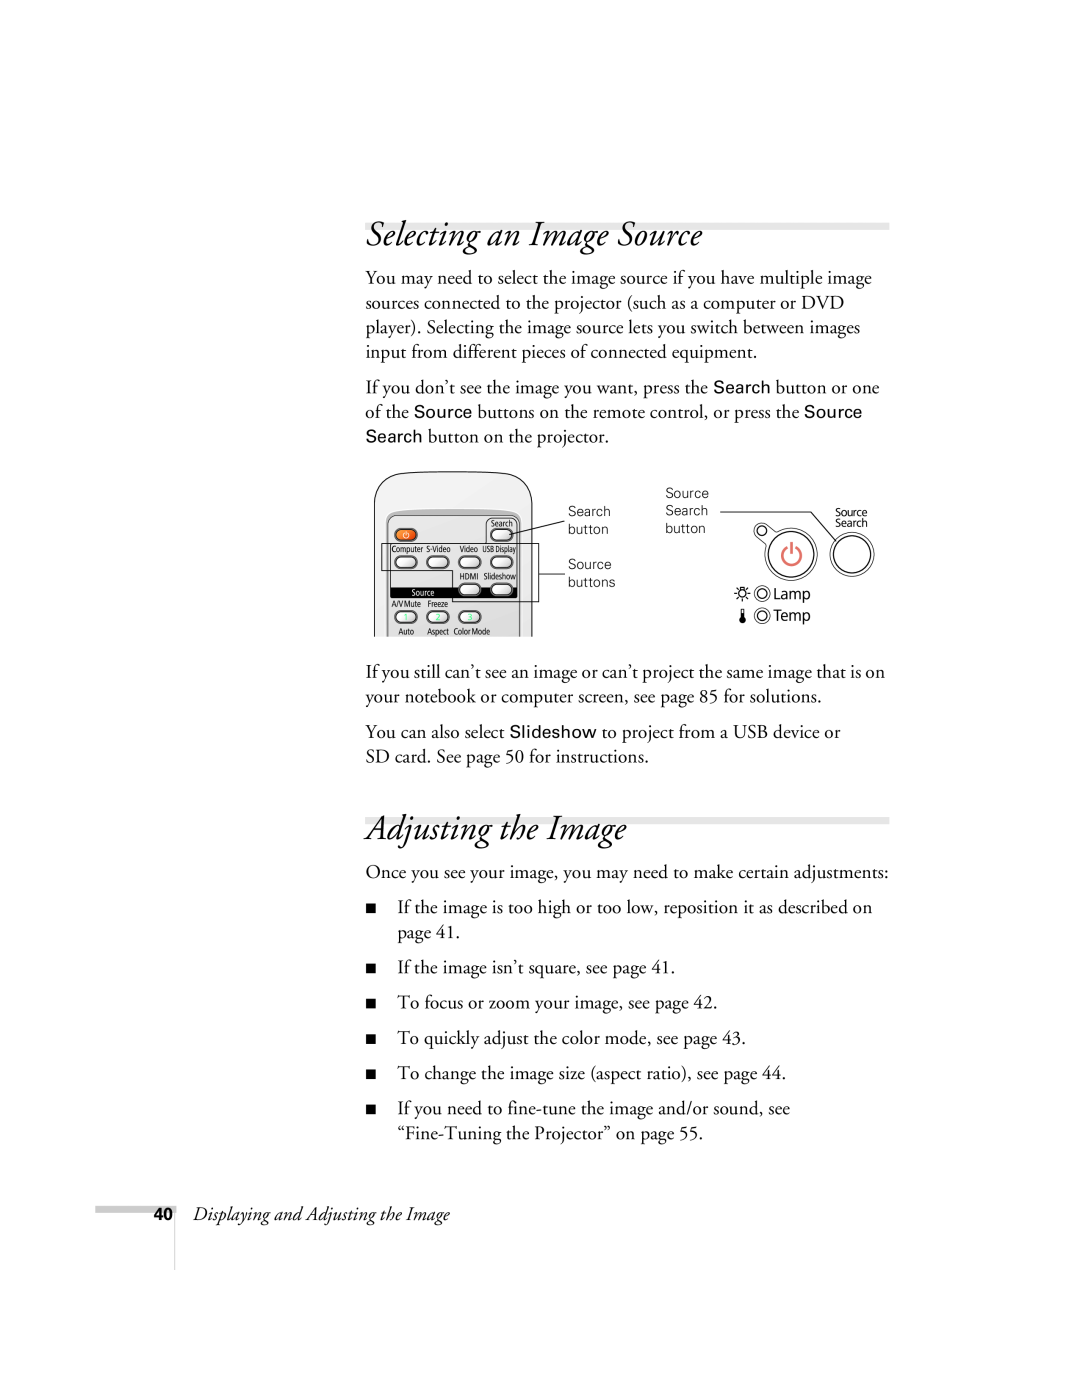 Univex 700 manual Selecting an Image Source, Displaying and Adjusting the Image 